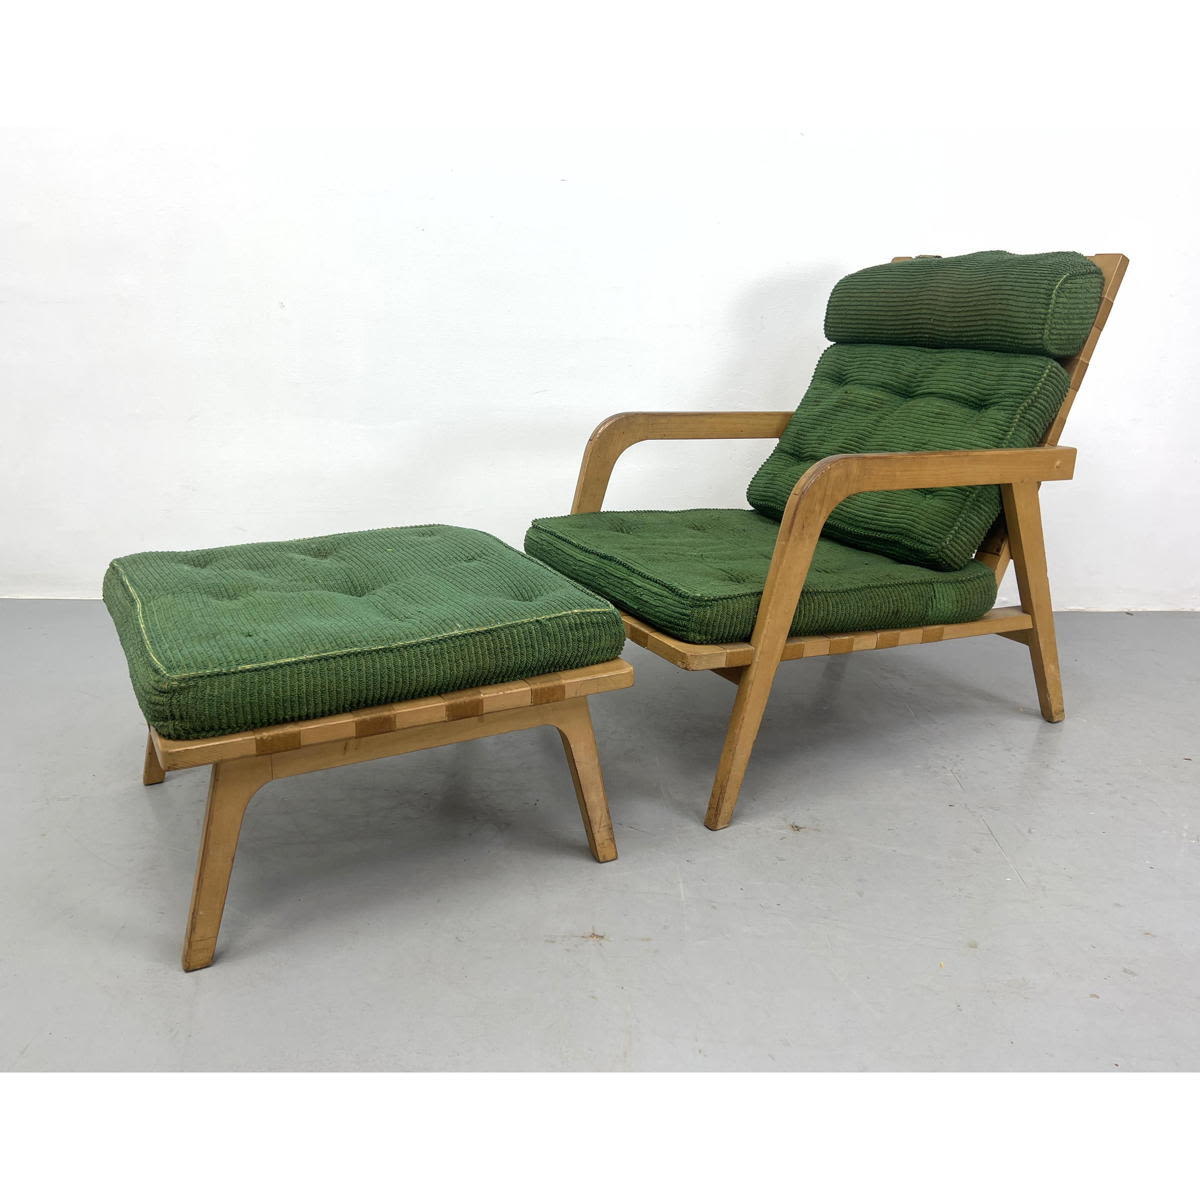 FICKS REED Modernist Lounge Chair 2ff8b5